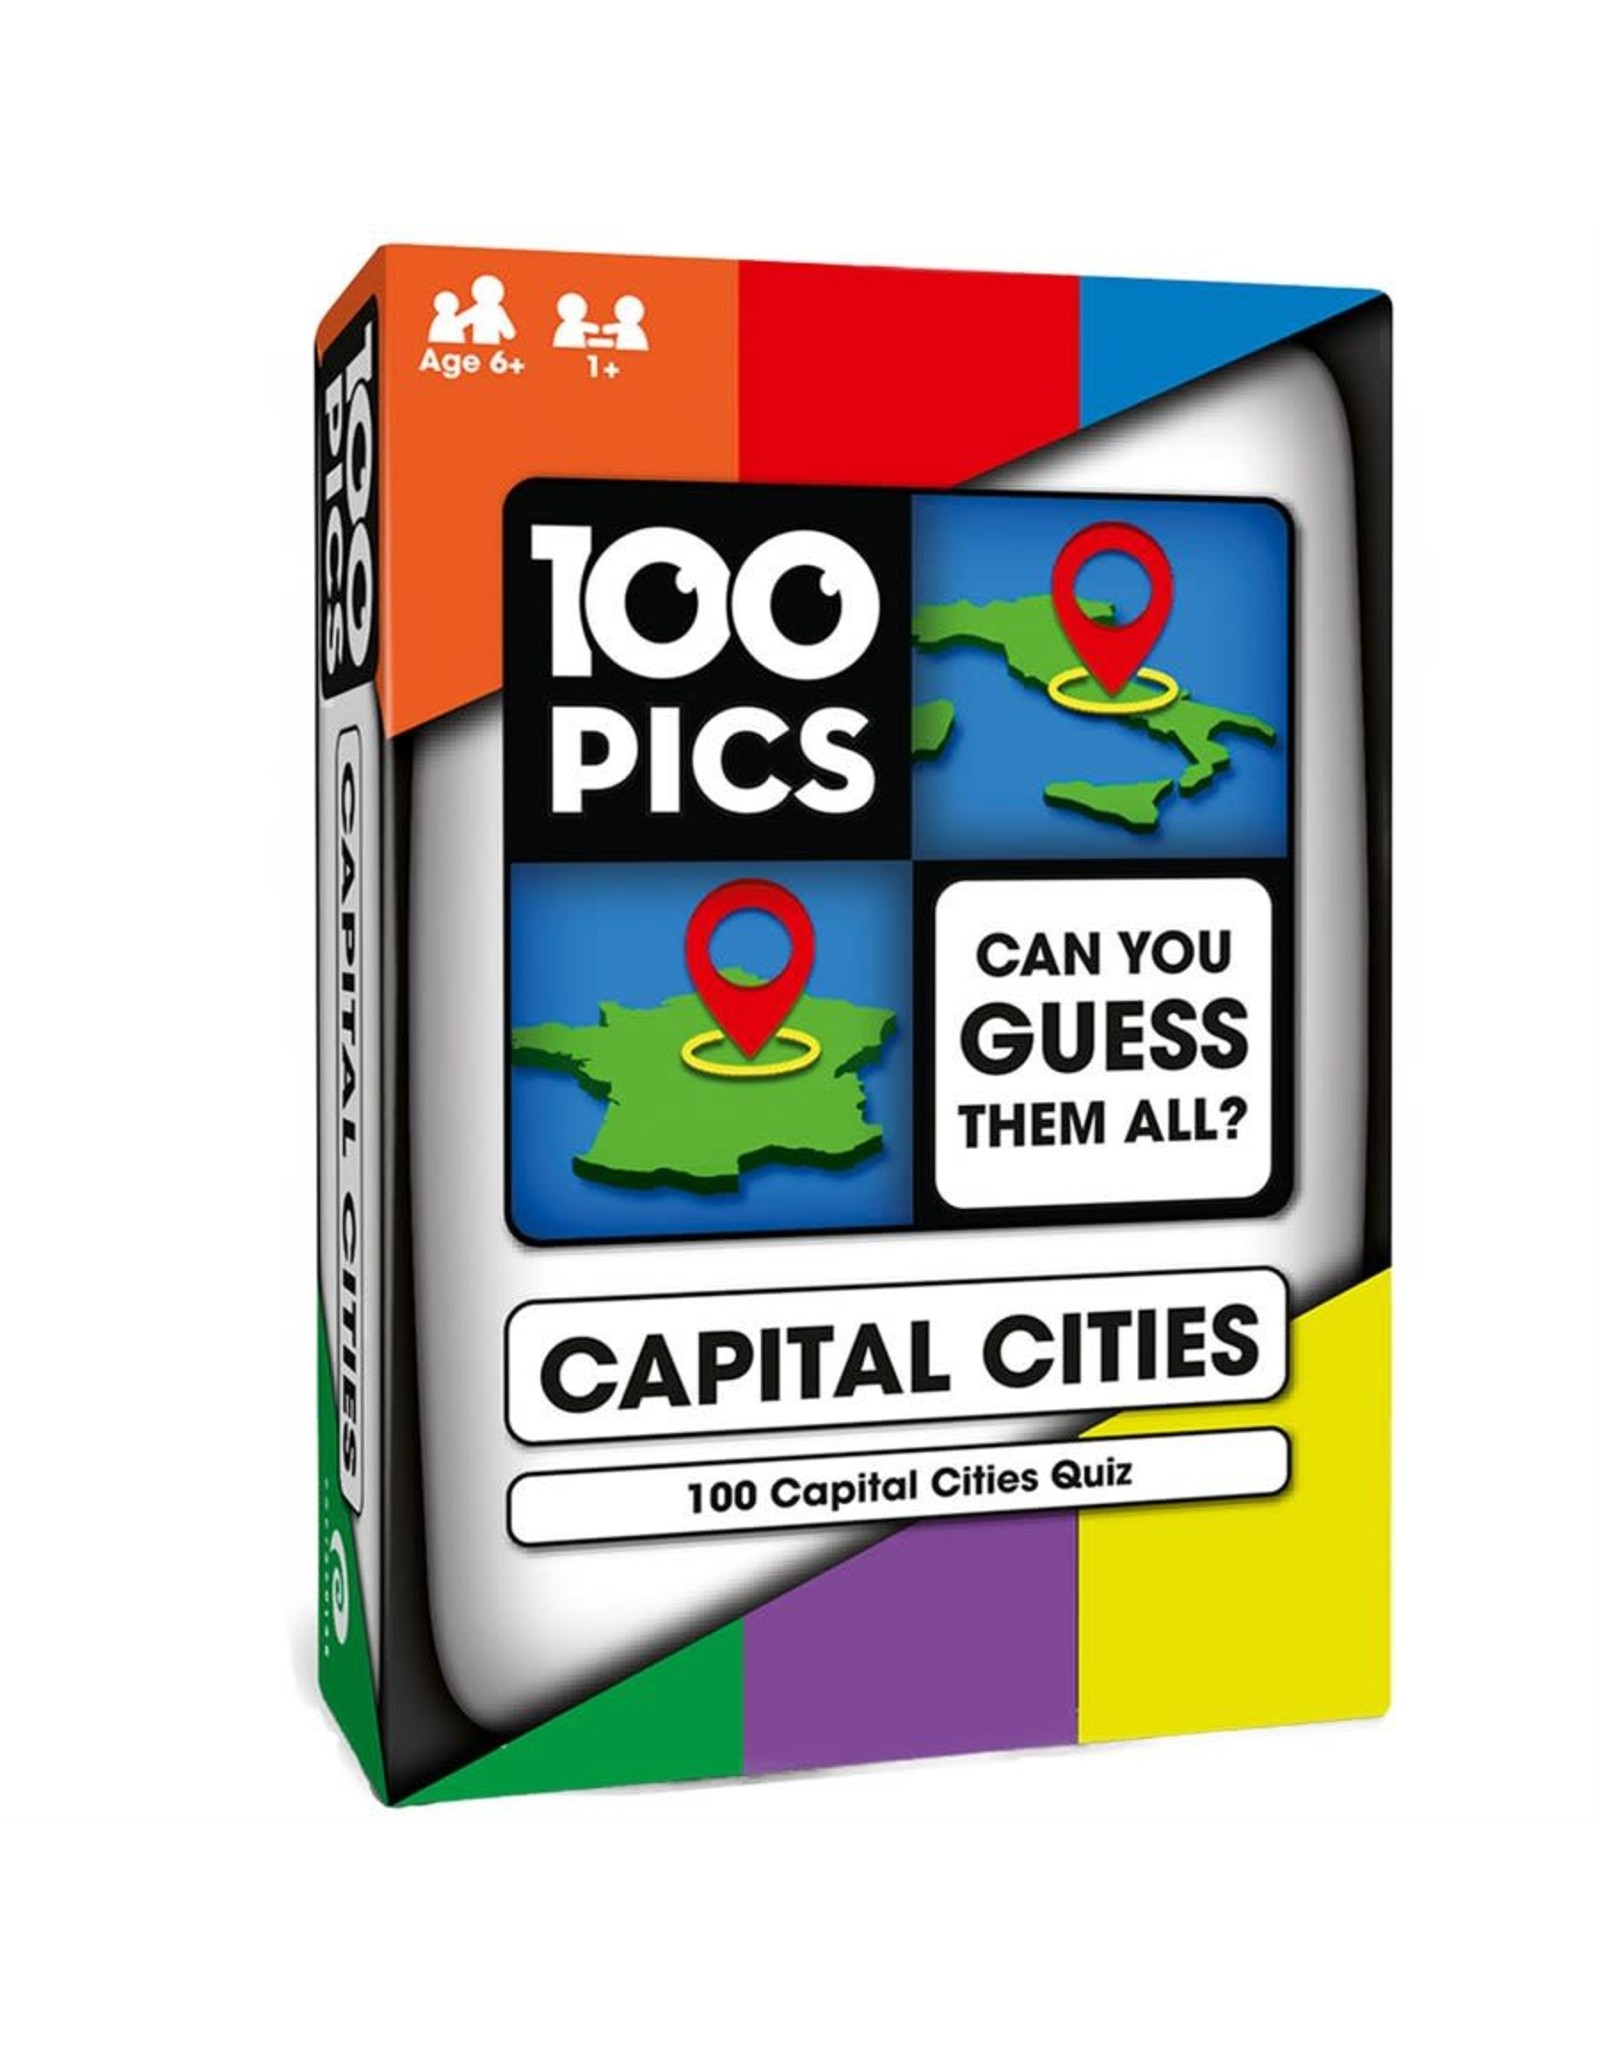 Haba 100 PICS - CAPITAL CITIES